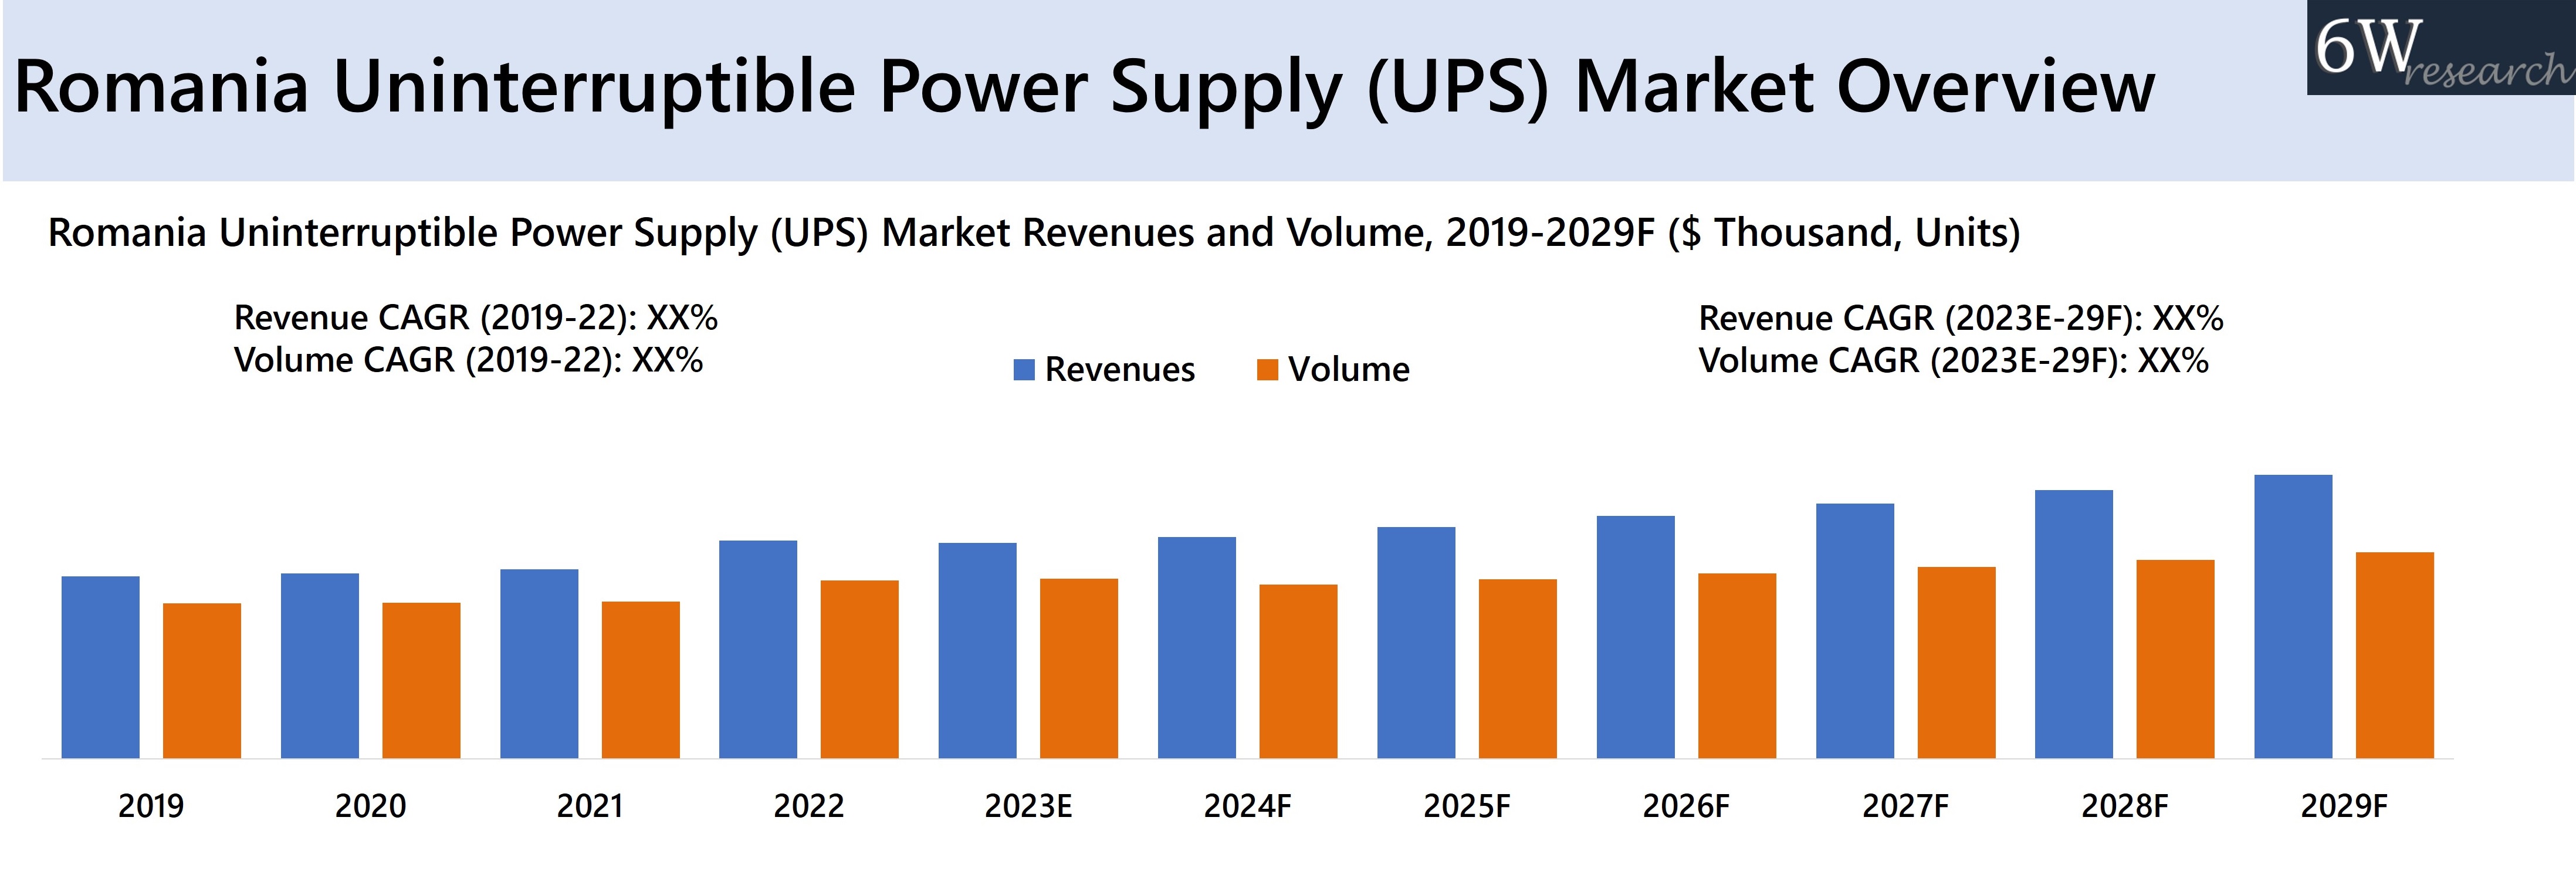 Romania Uninterruptible Power Supply (UPS) Market Overview